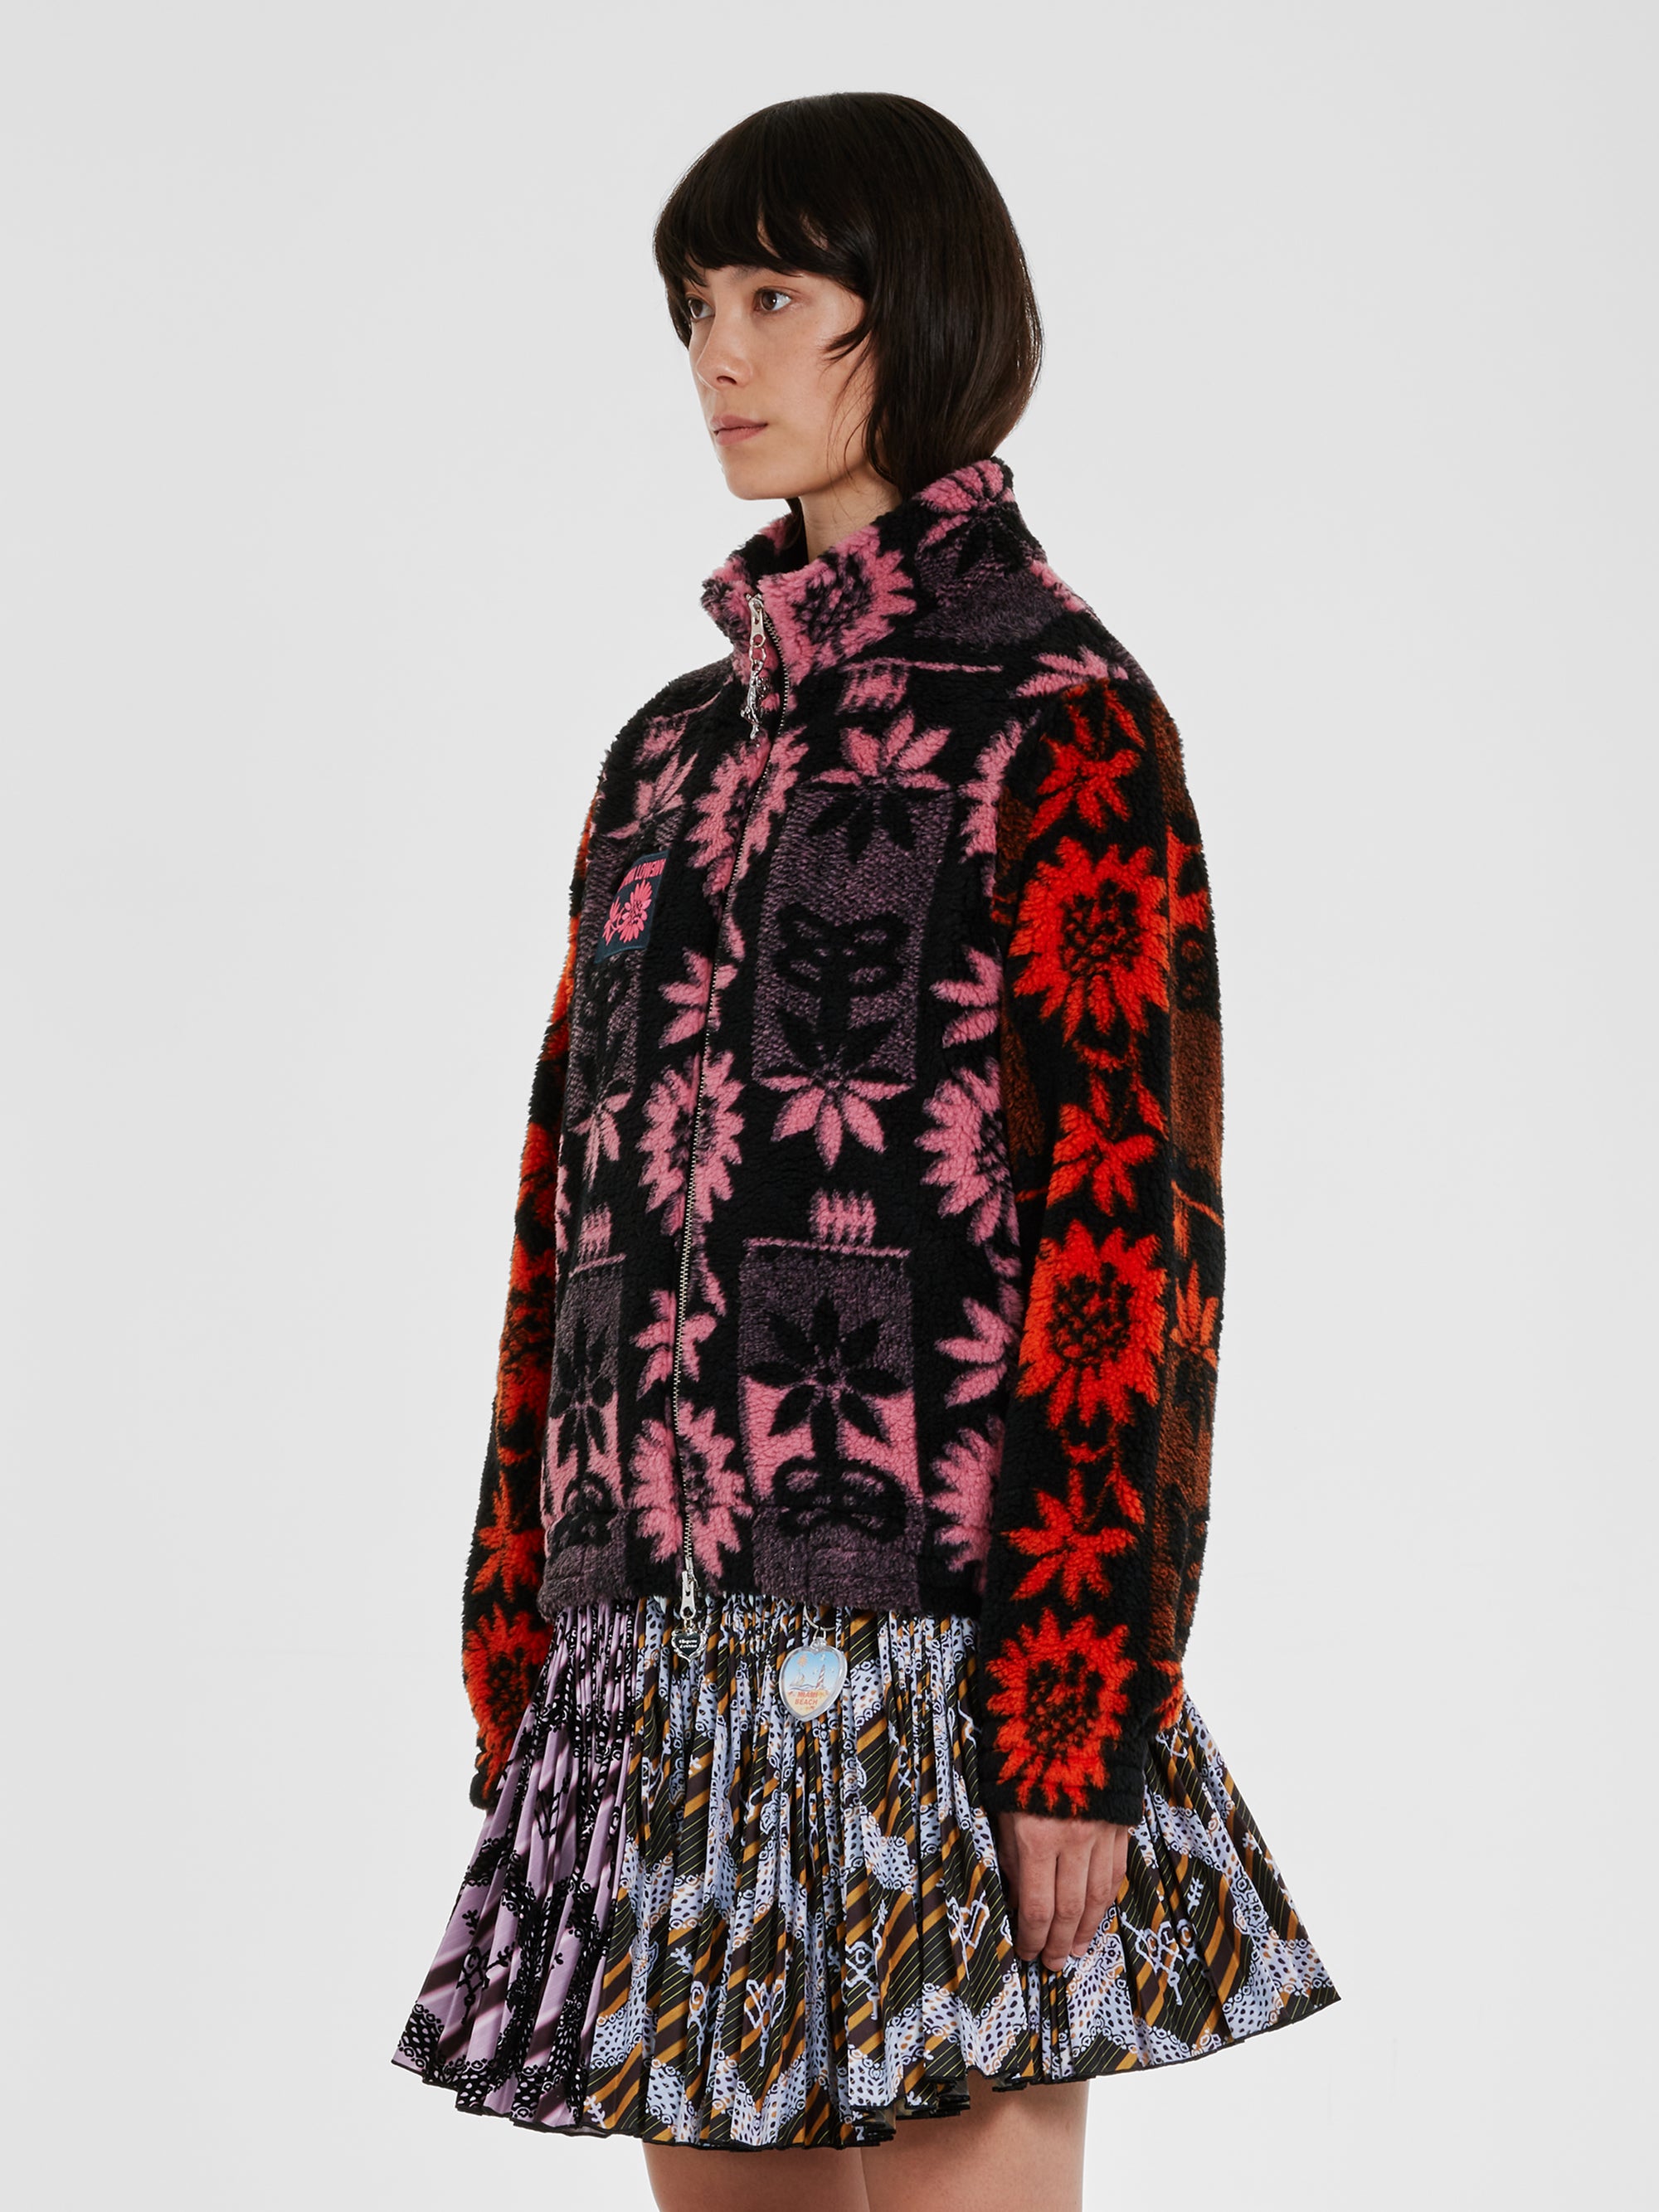 Chopova Lowena - Women’s Sunflower Knitted Fleece - (Pink/Orange) view 2